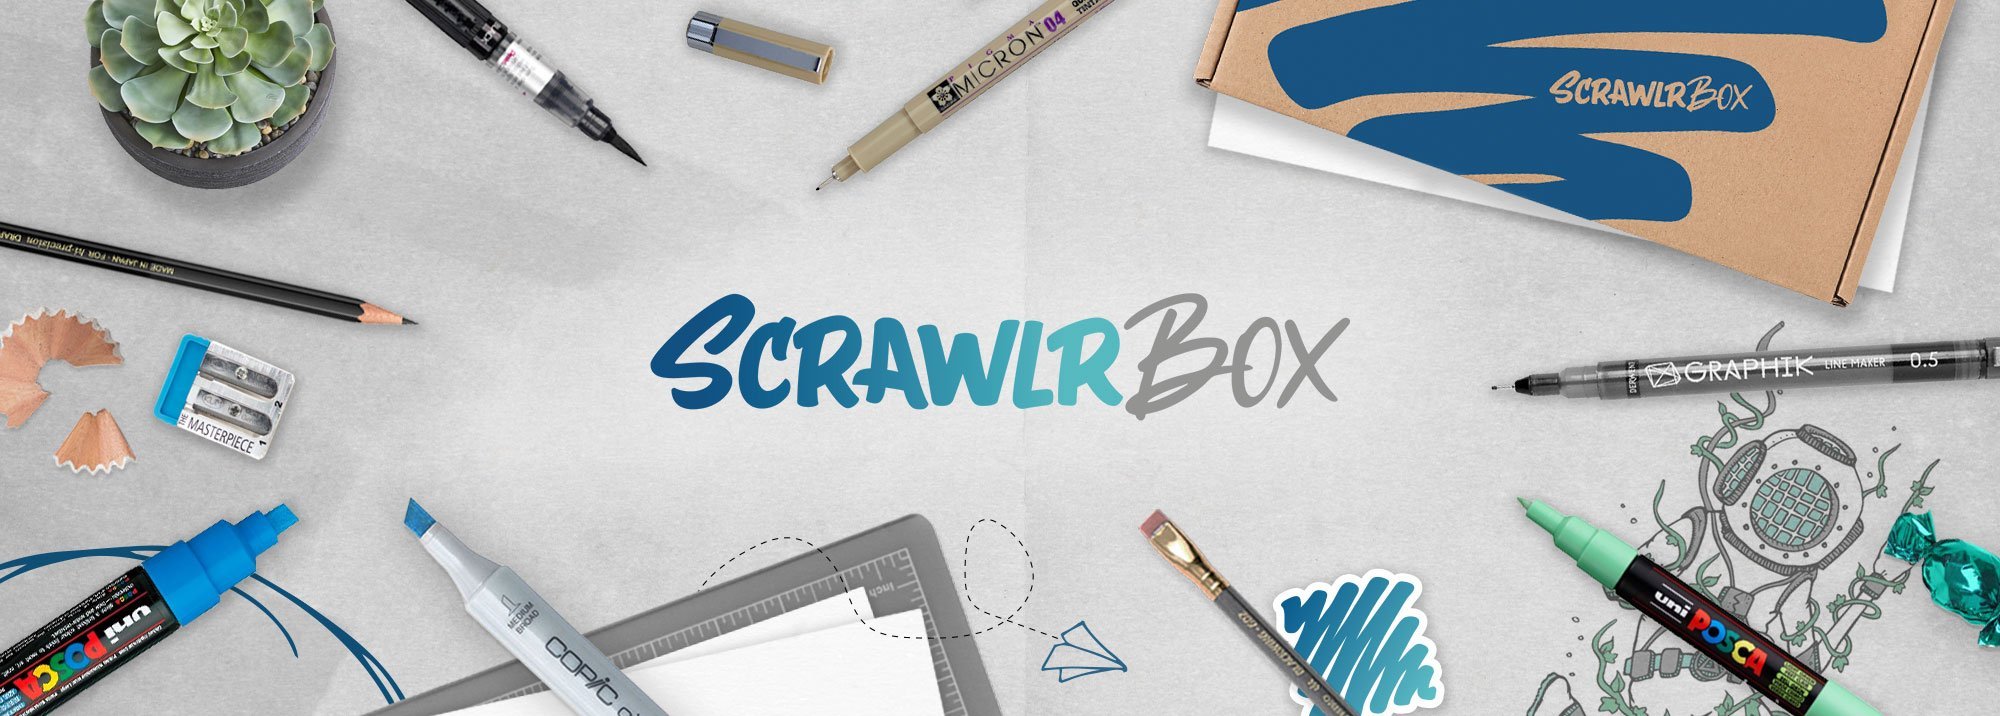 ScrawlrBox